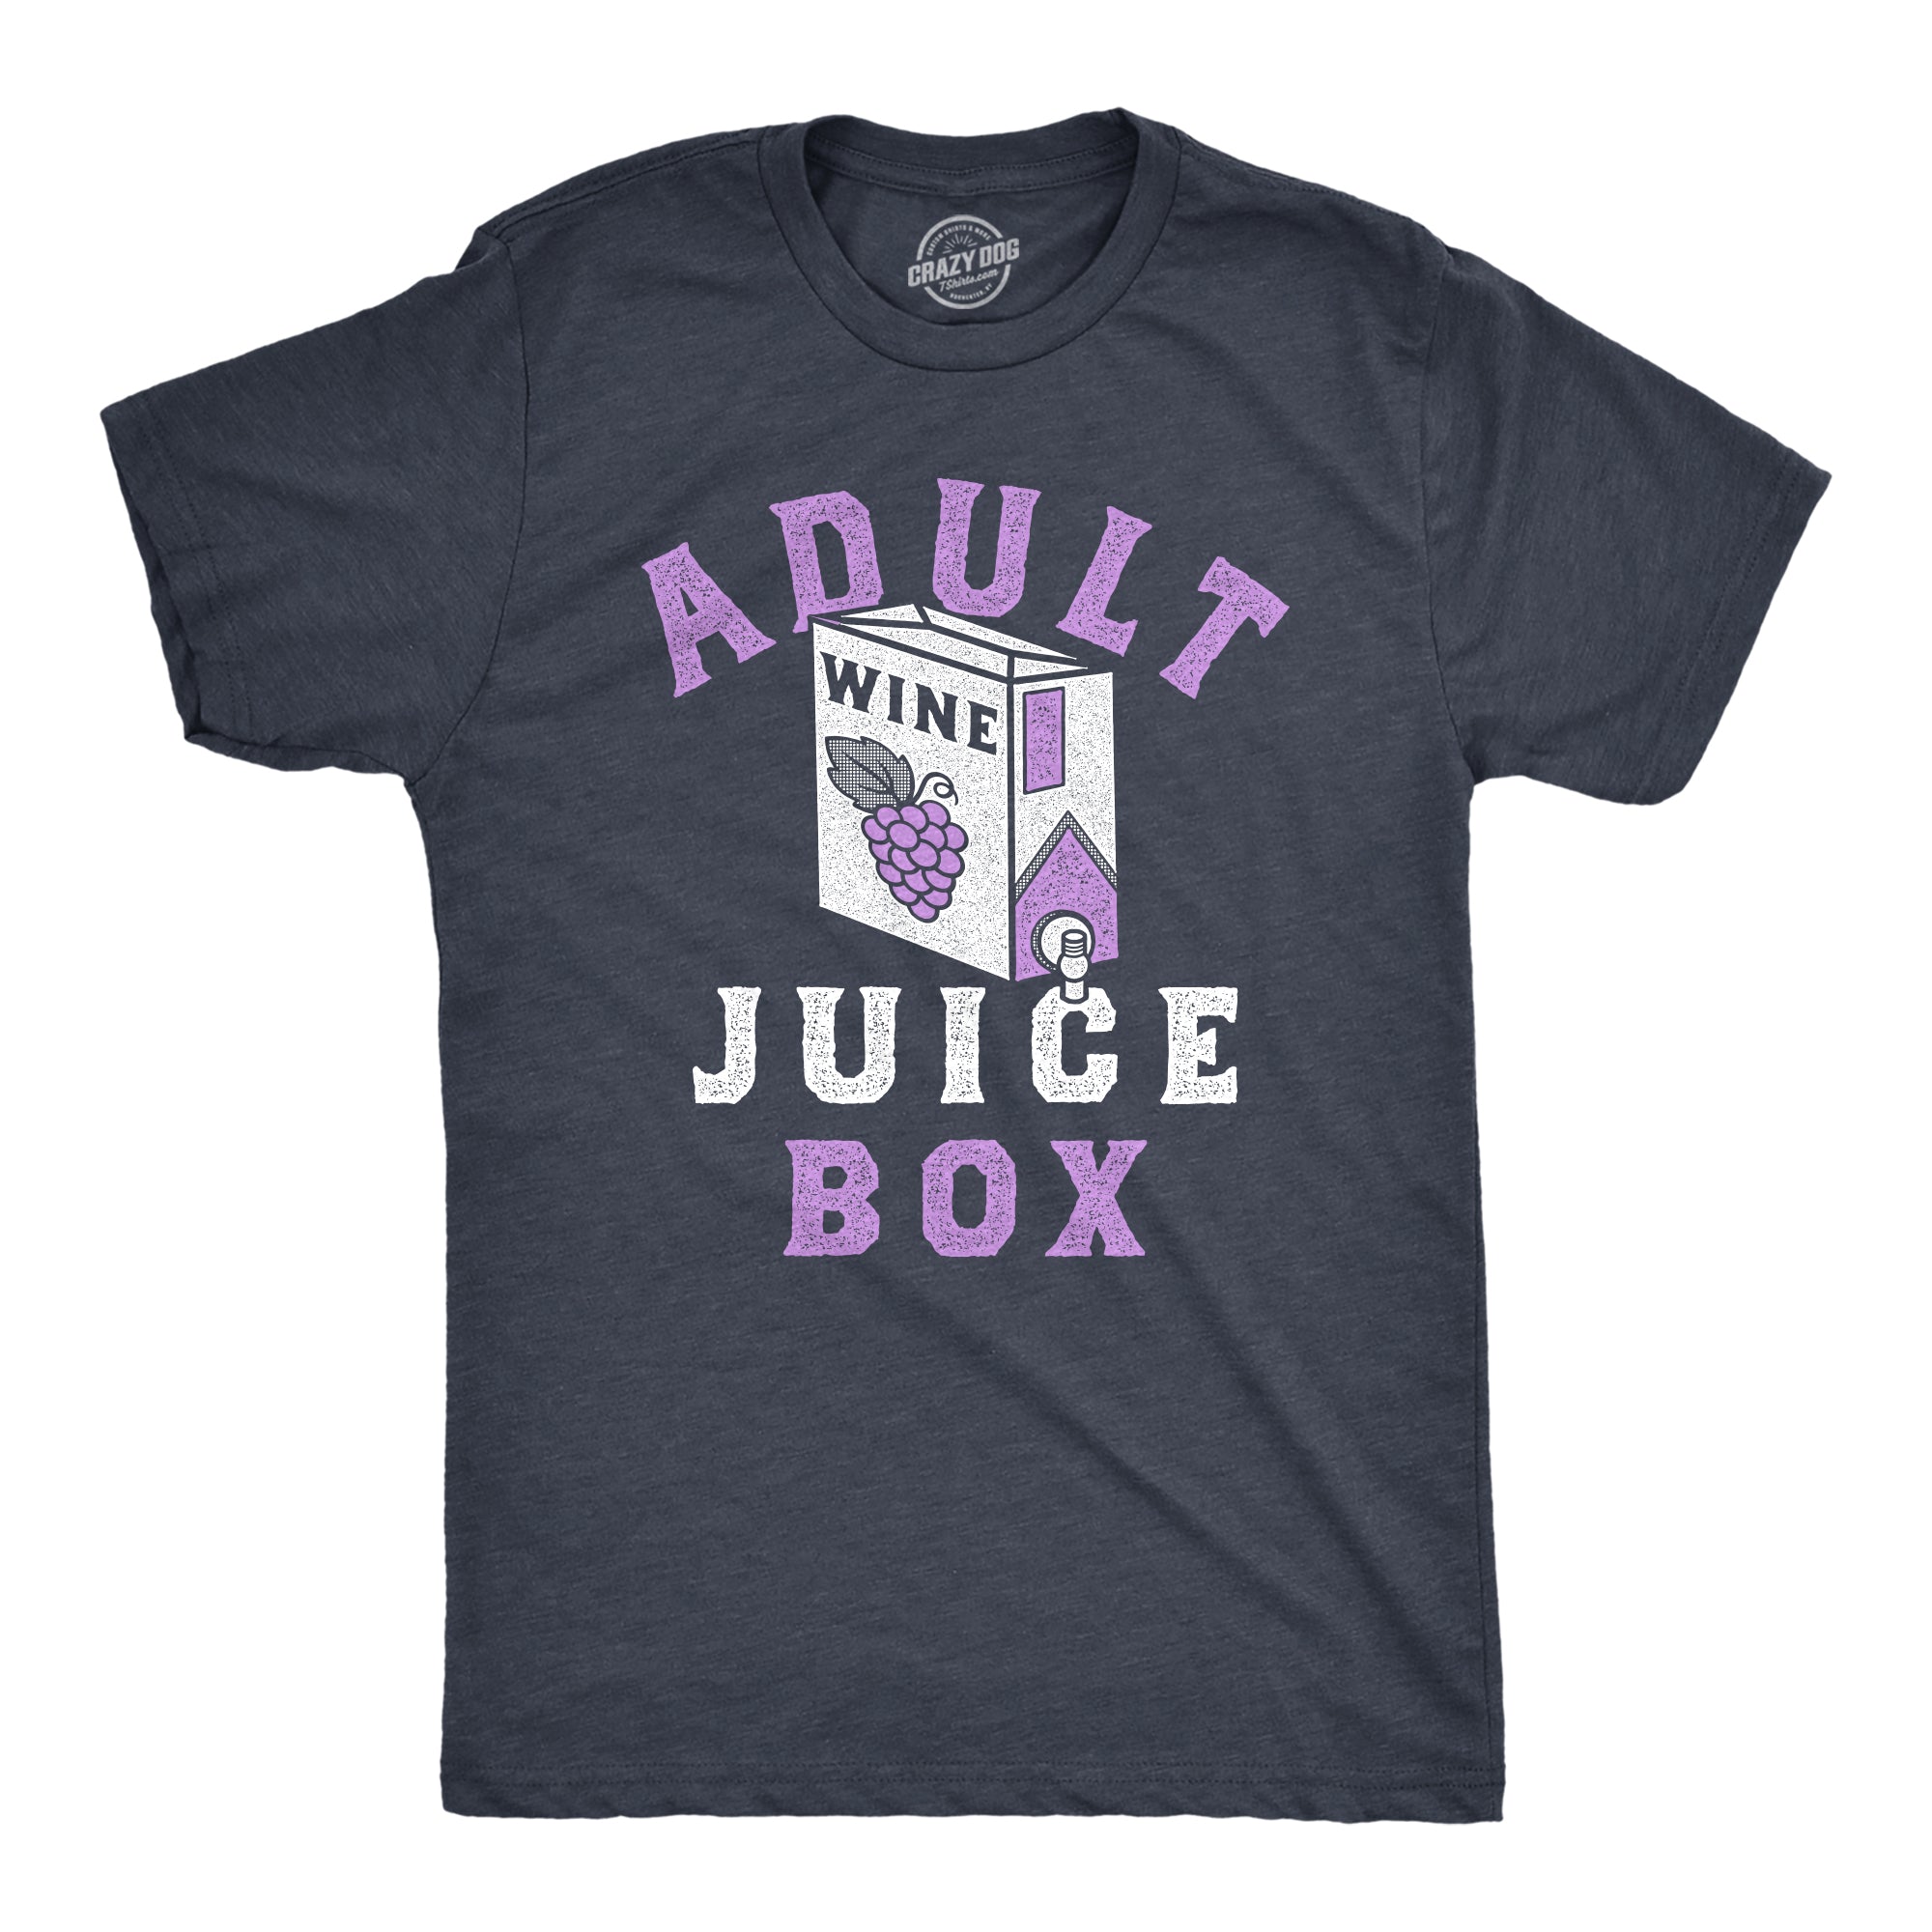 Funny Heather Black - Juice Box Adult Juice Box Mens T Shirt Nerdy Wine sarcastic Tee